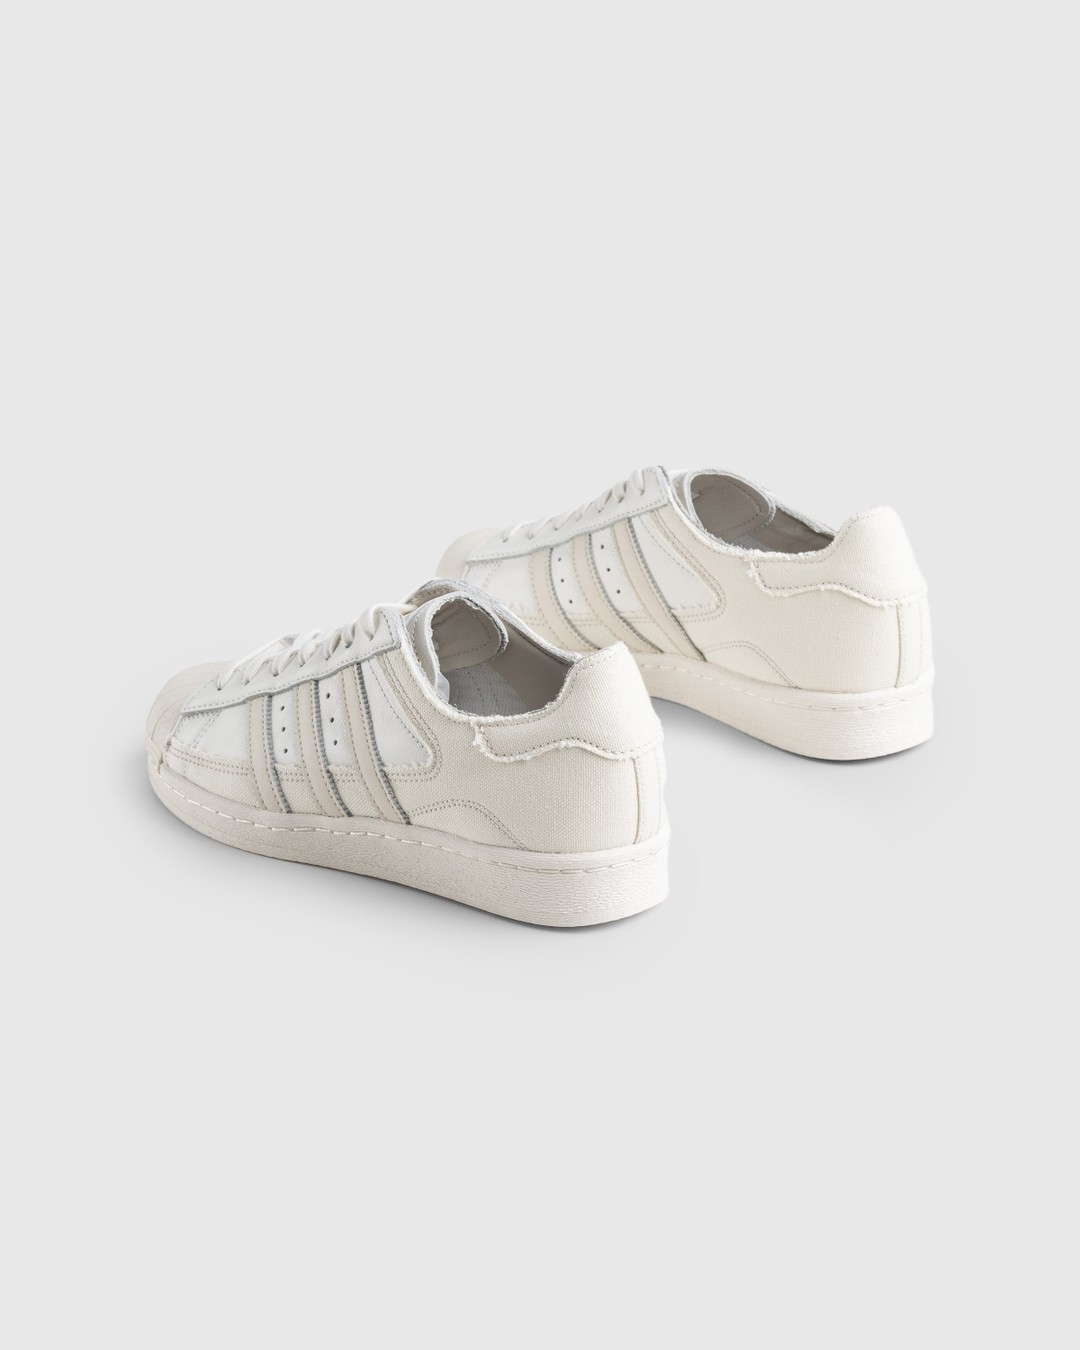 Adidas – Superstar 82 White/Beige - Sneakers - Beige - Image 4